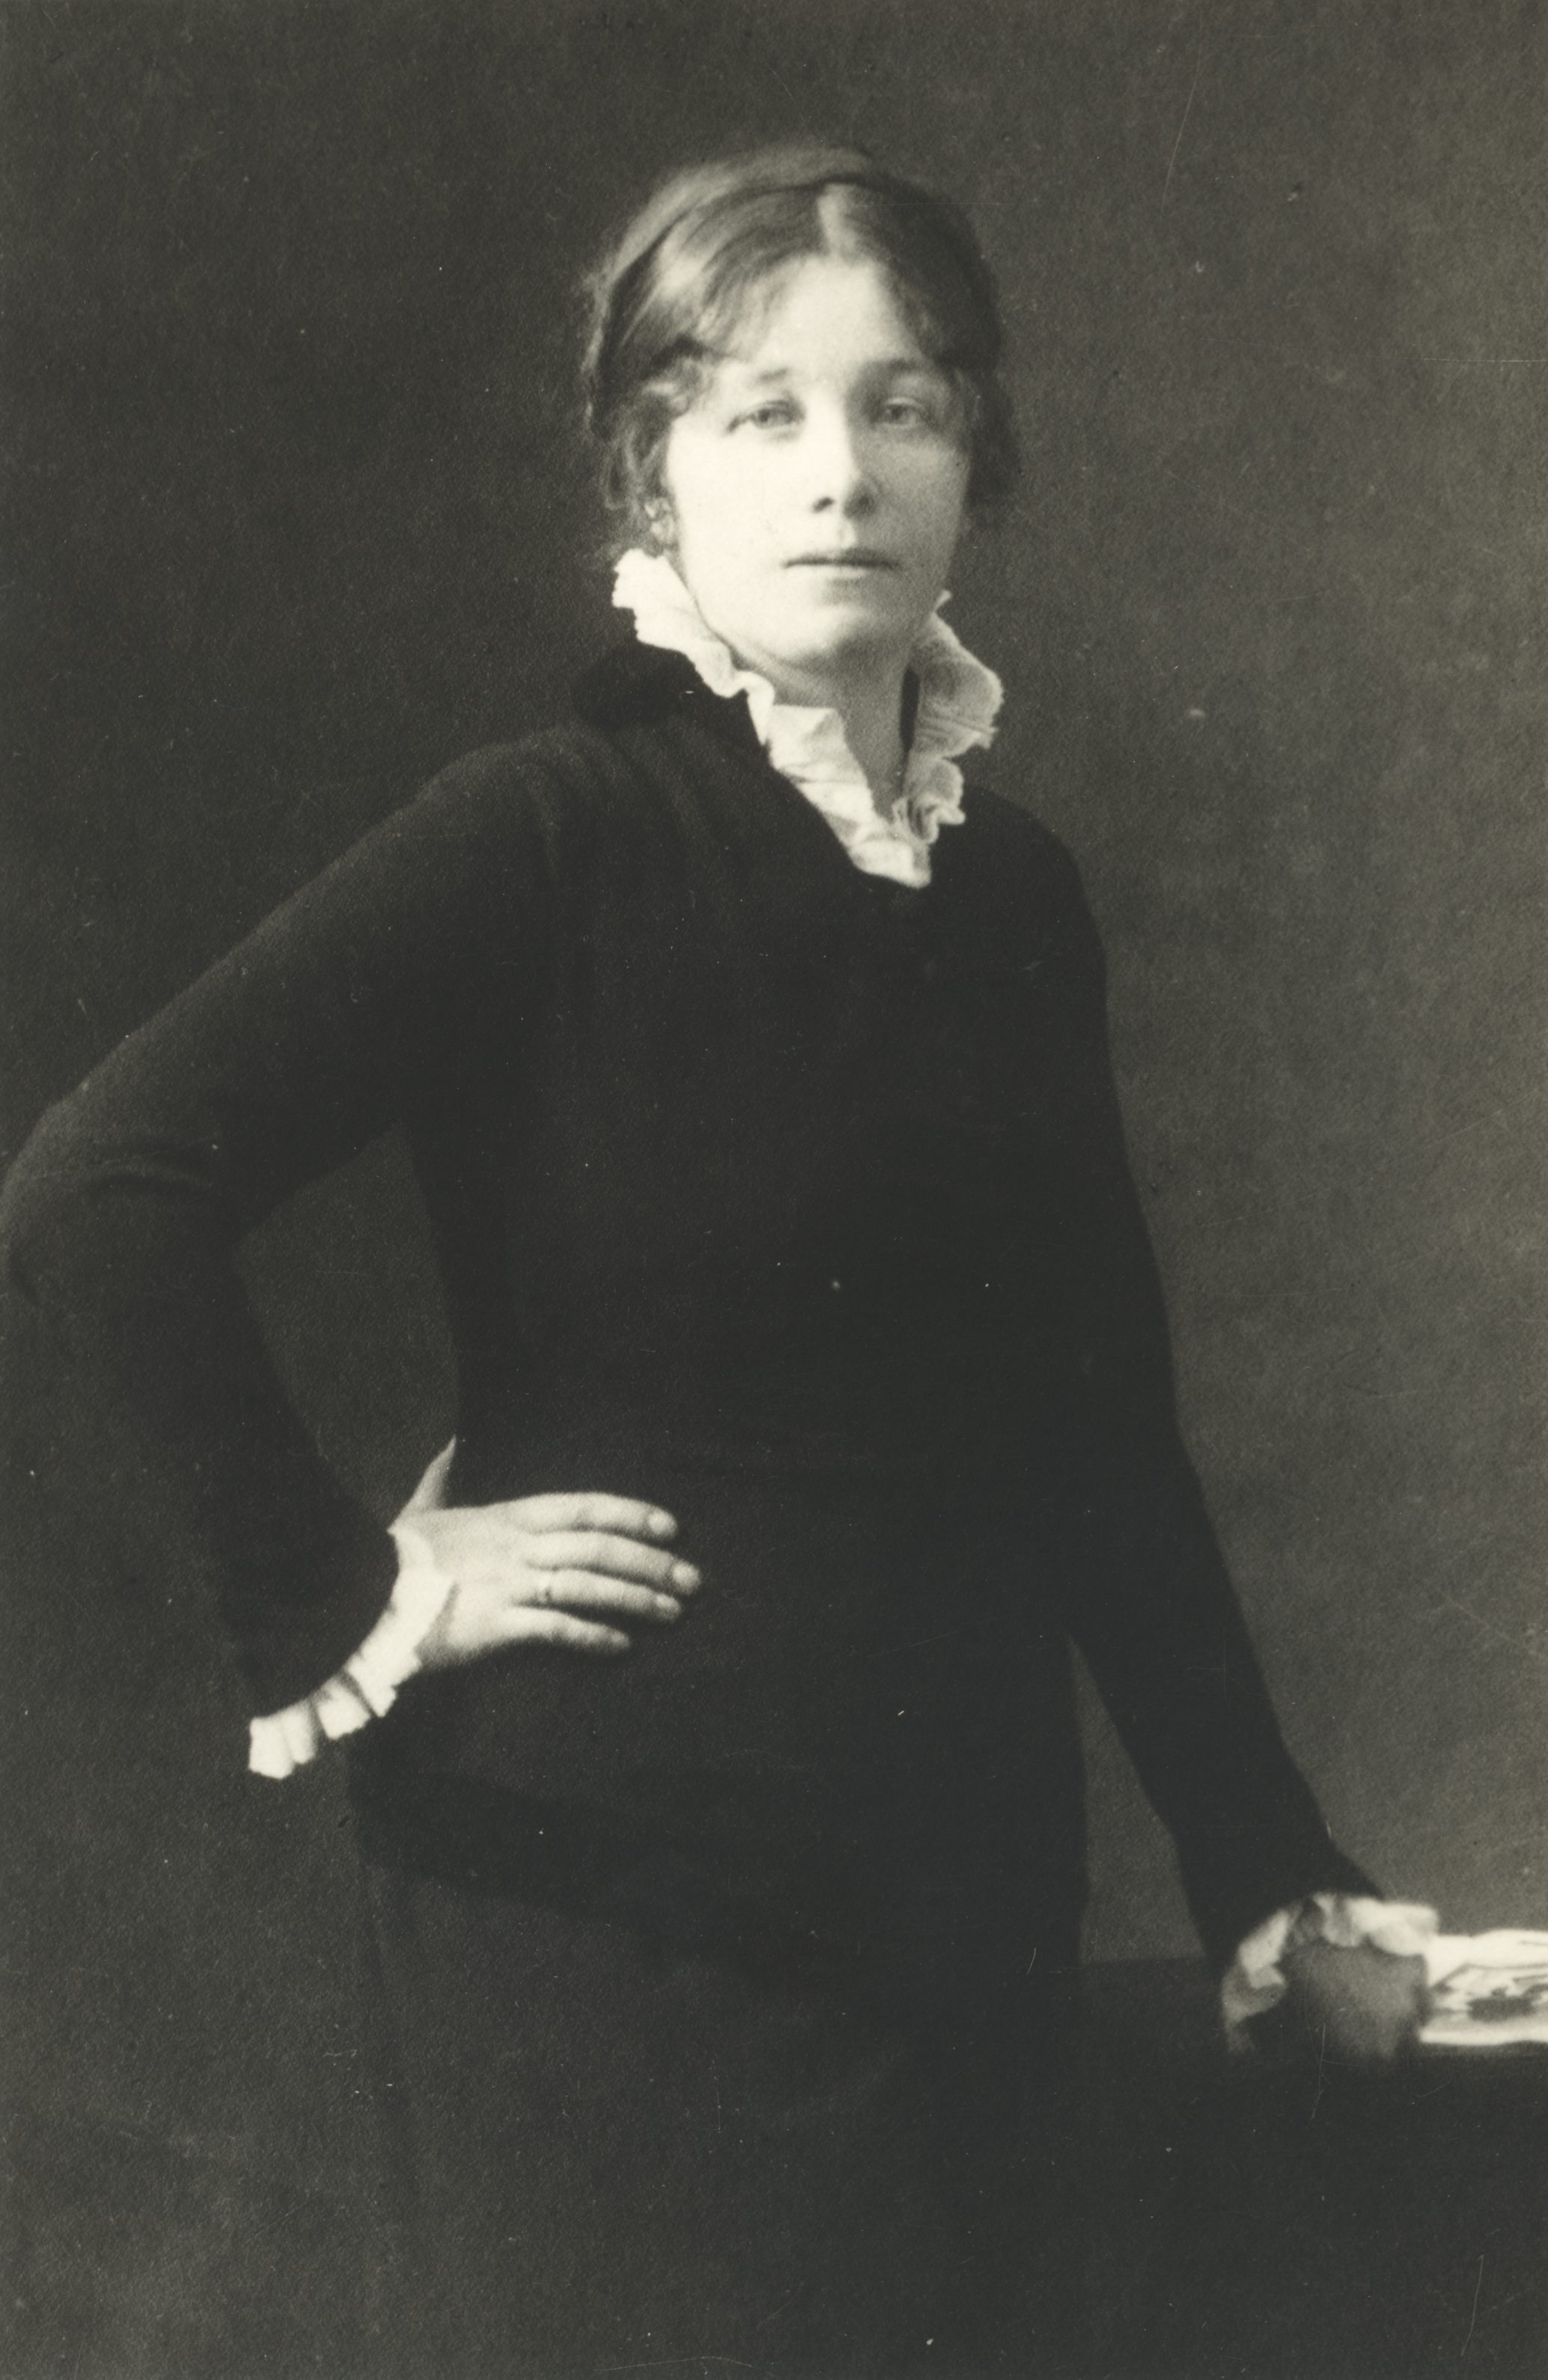 Under, Marie 1915 in Tallinn